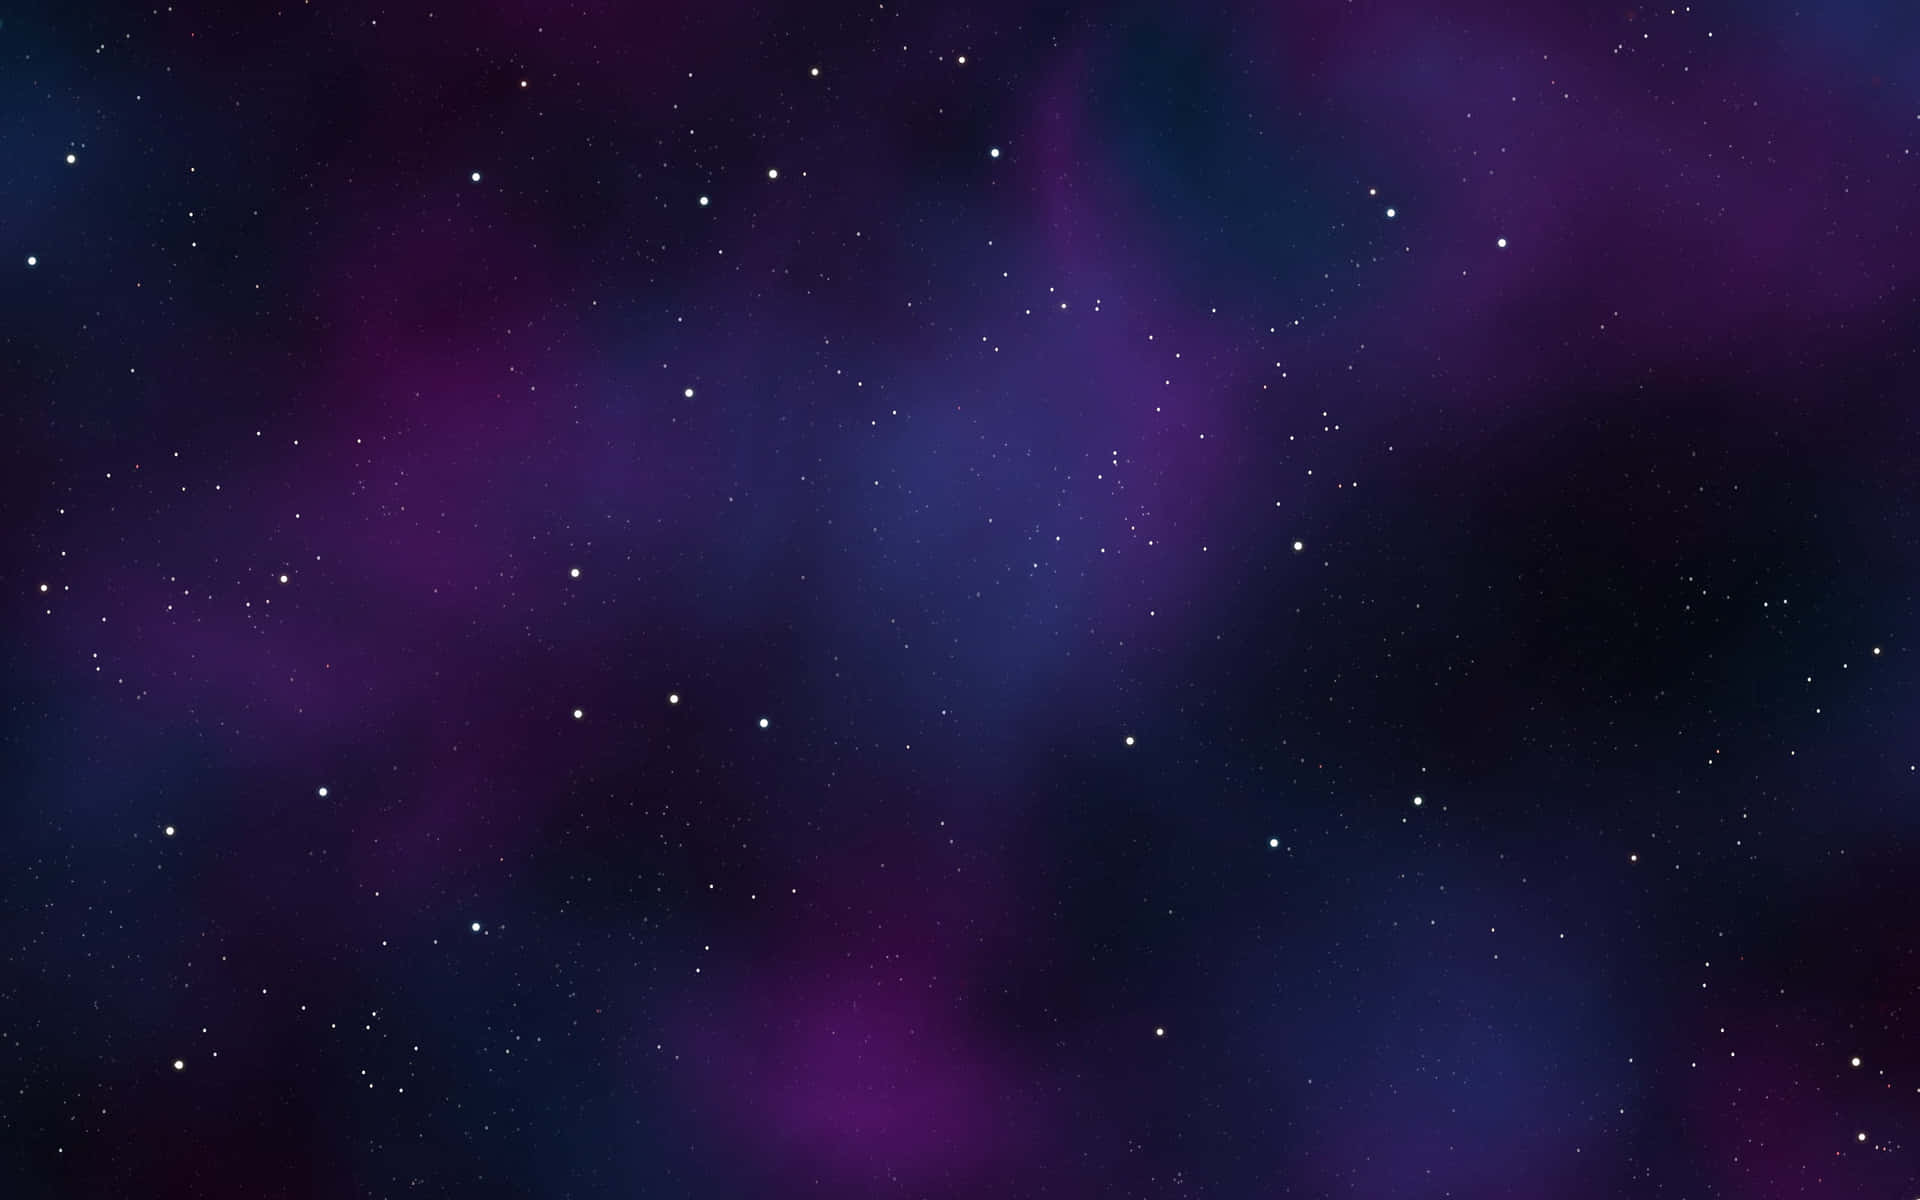 “The Majestic Black and Purple Galaxy” Wallpaper